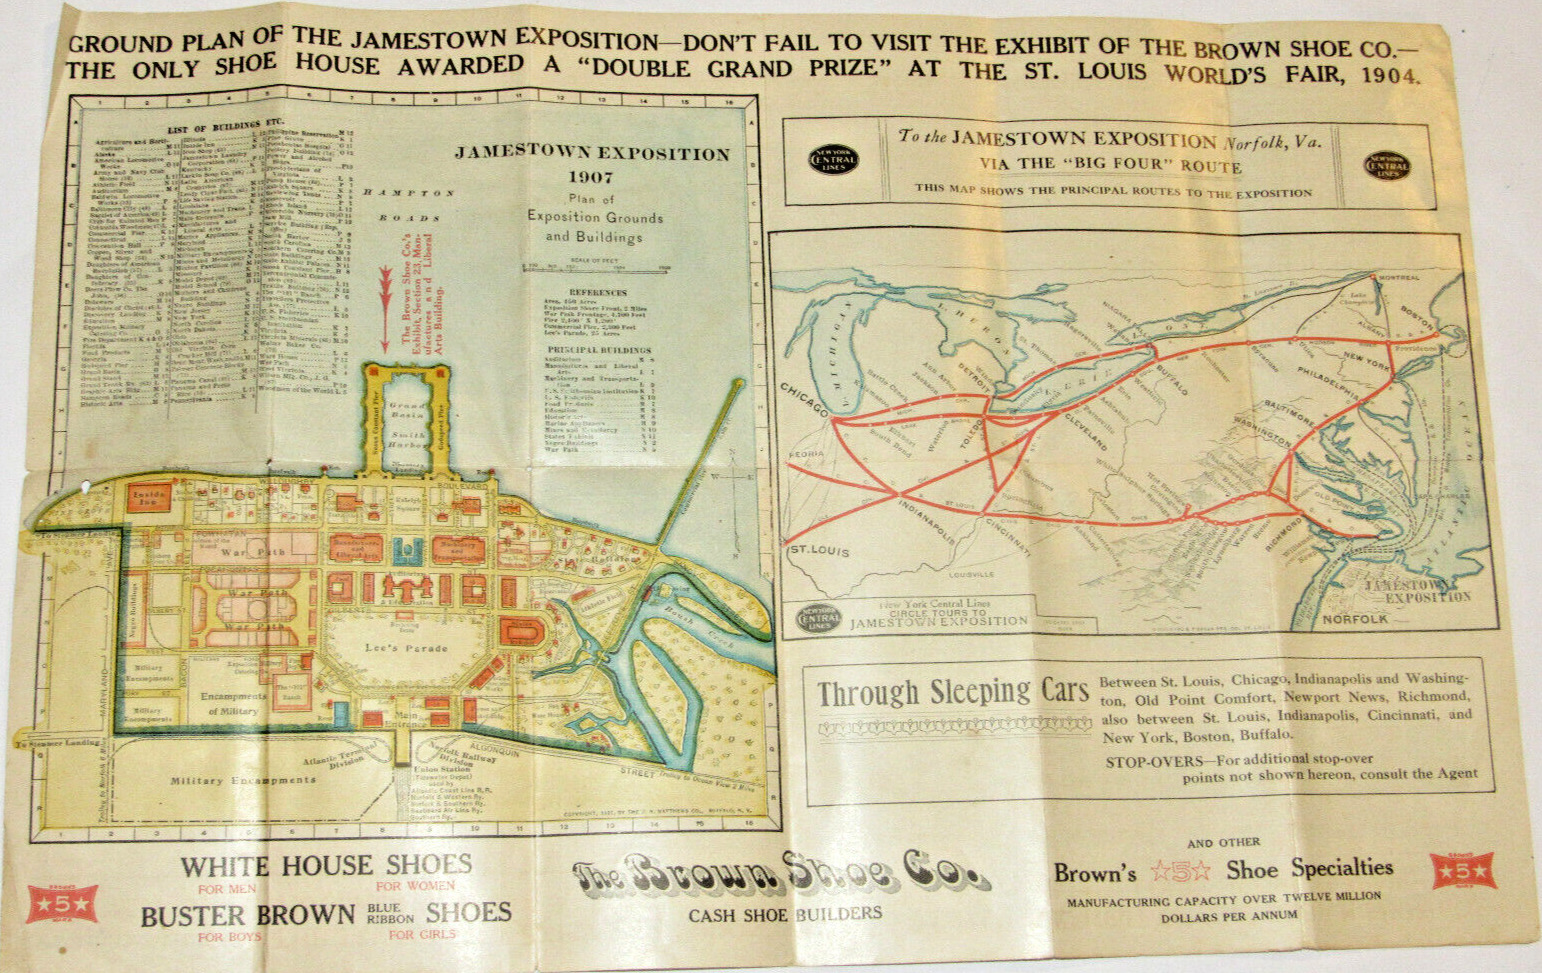 VTG 1907 JAMESTOWN EXPOSITION GROUND PLAN BROWN SHOE CO ADVERTISING/POCKET SIZE